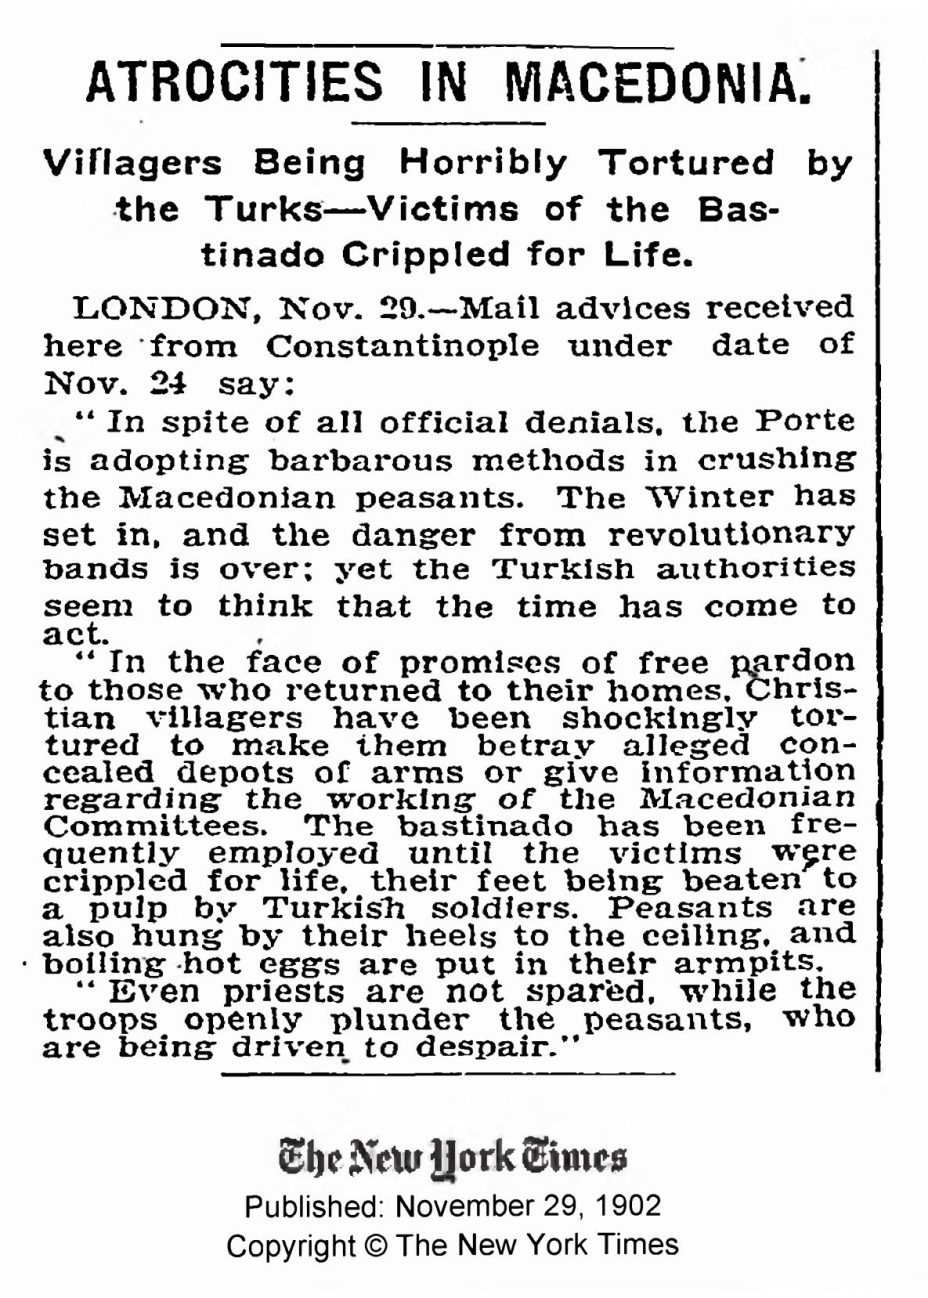 1902.11.29_The New York Times - Atrocities in Macedonia